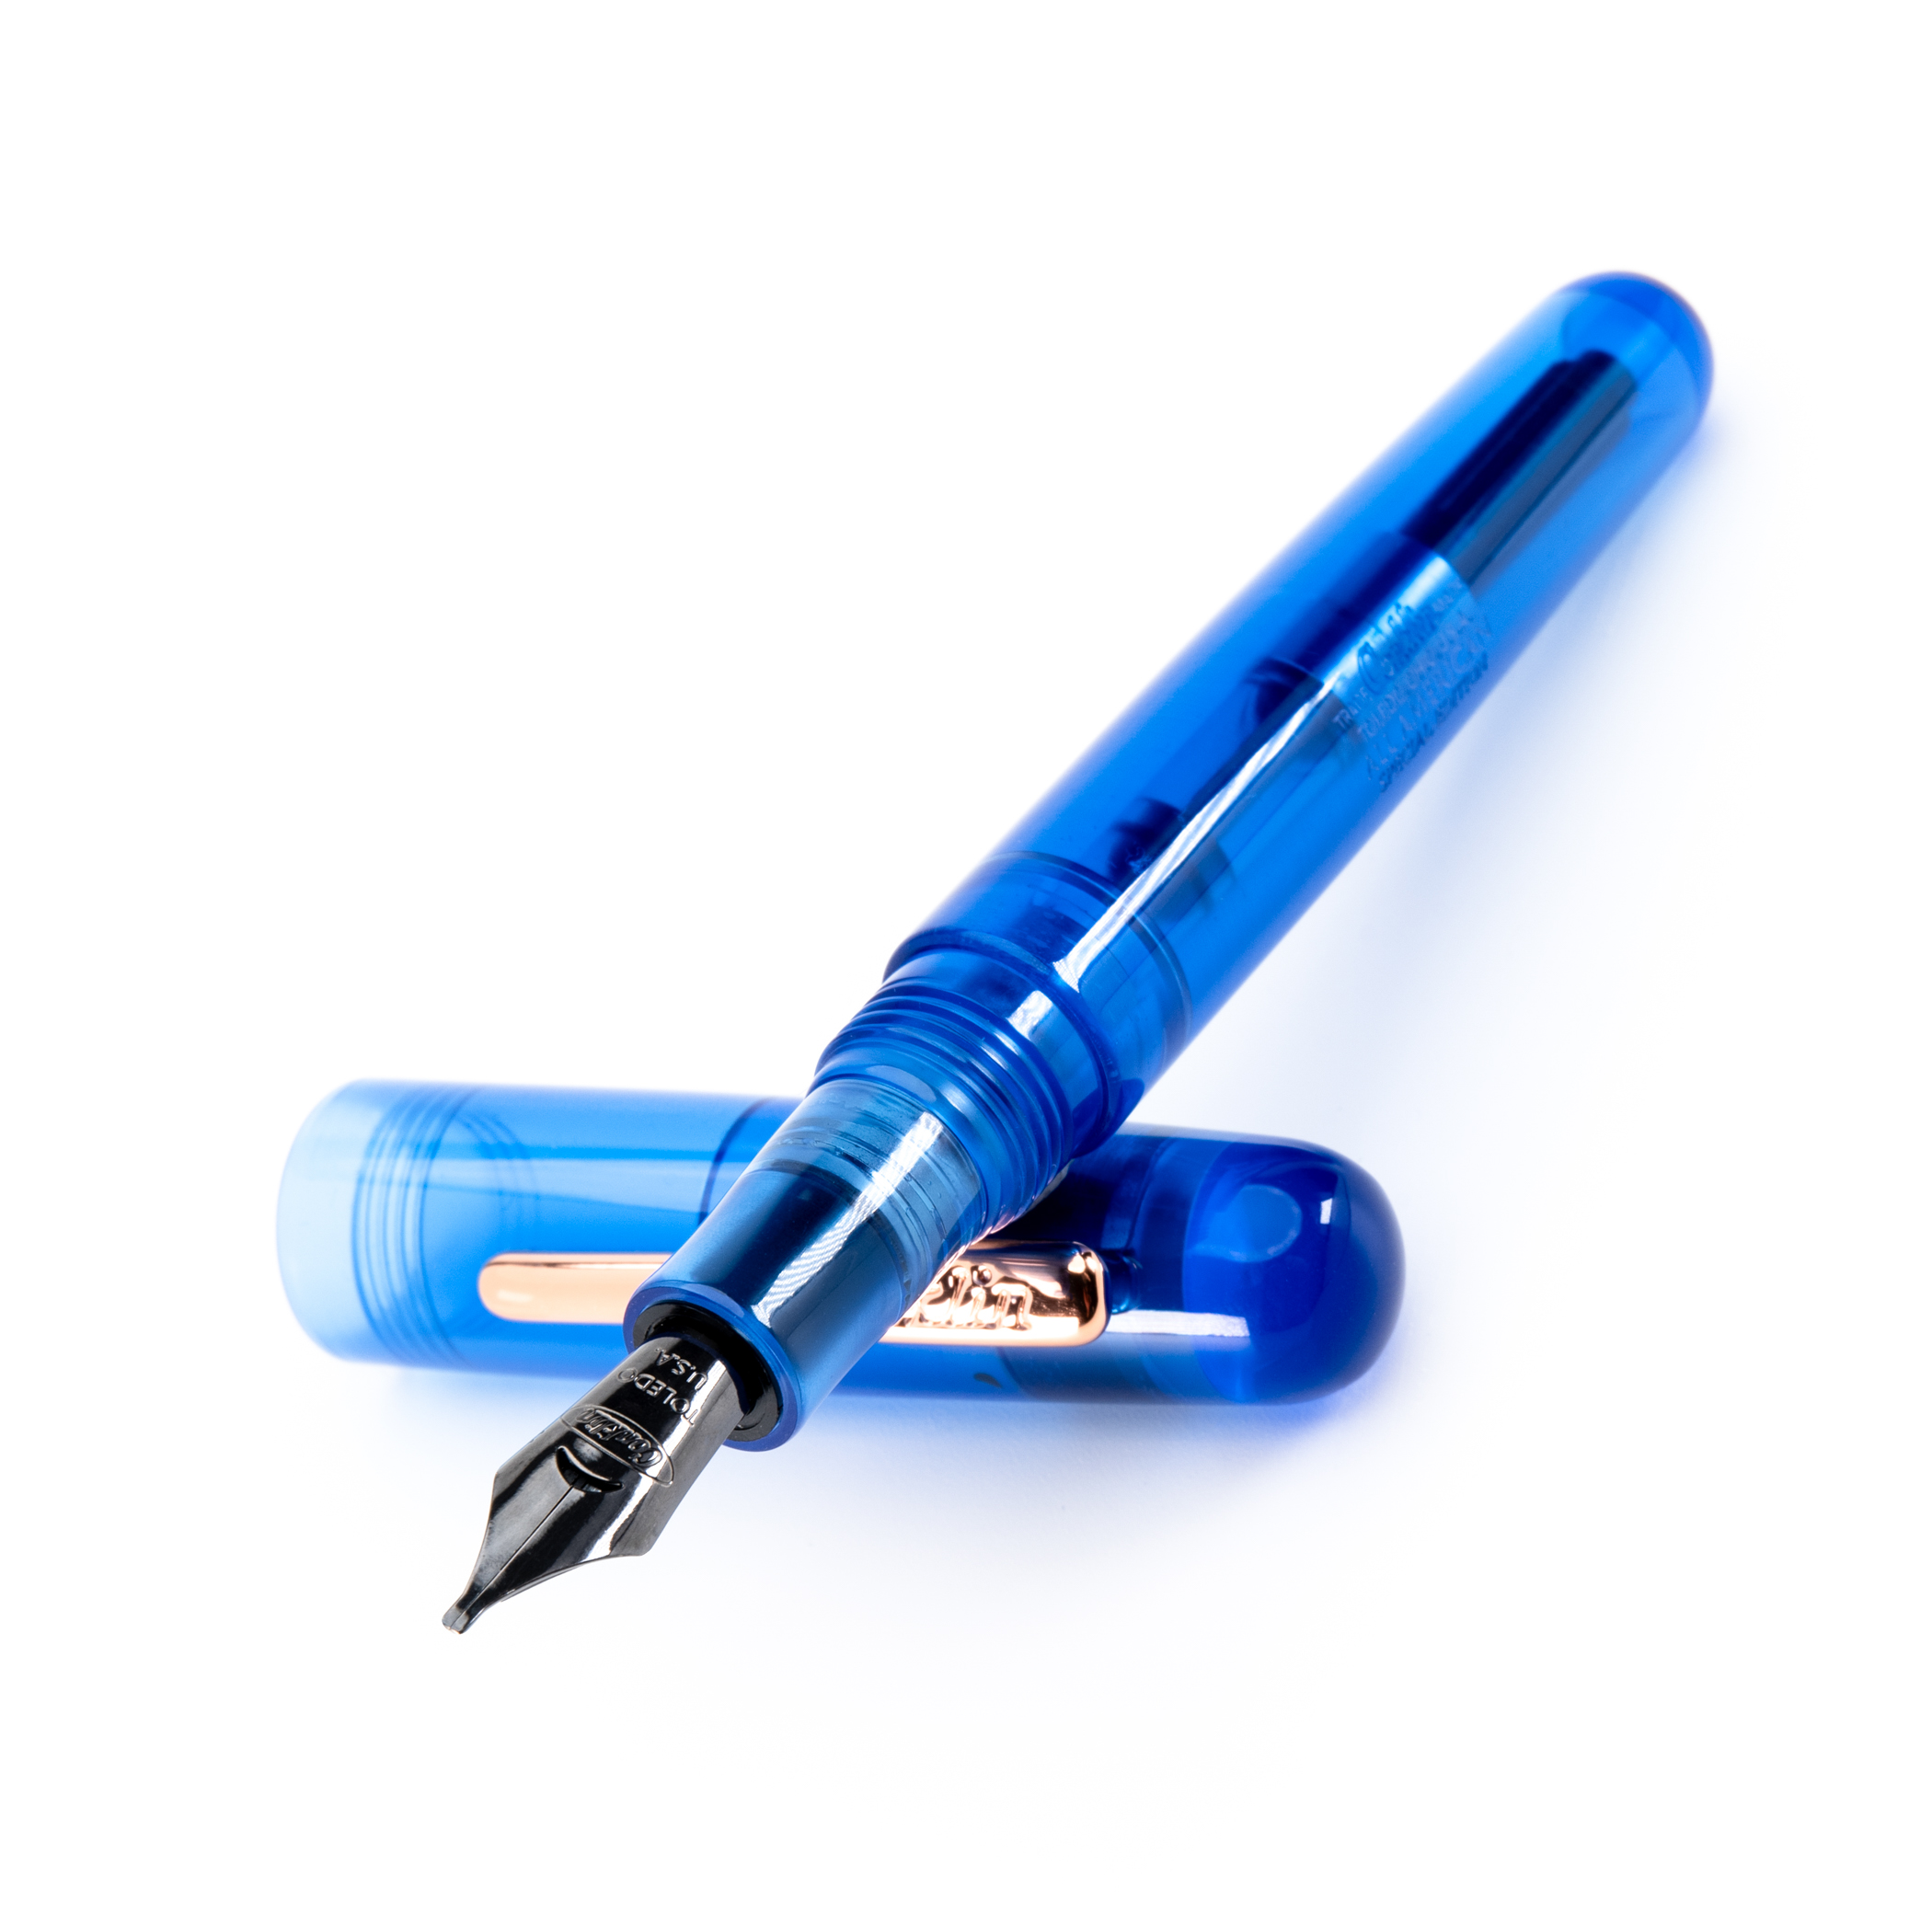 Conklin All American Demo Blue Special Edition Fountain Pen